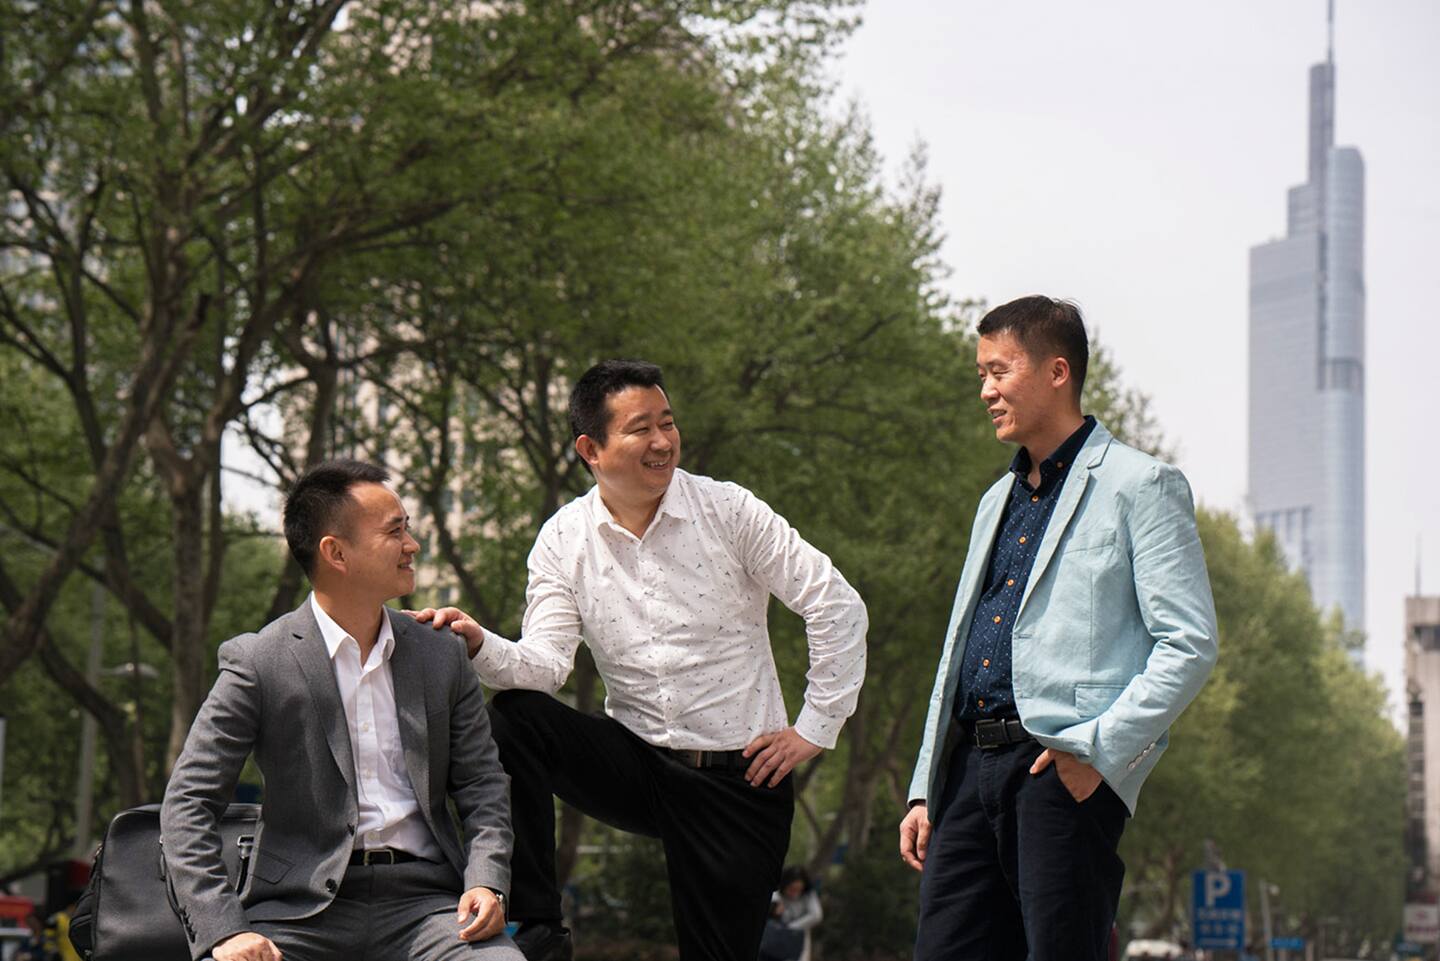 Changing life in Nanjing - Group of men